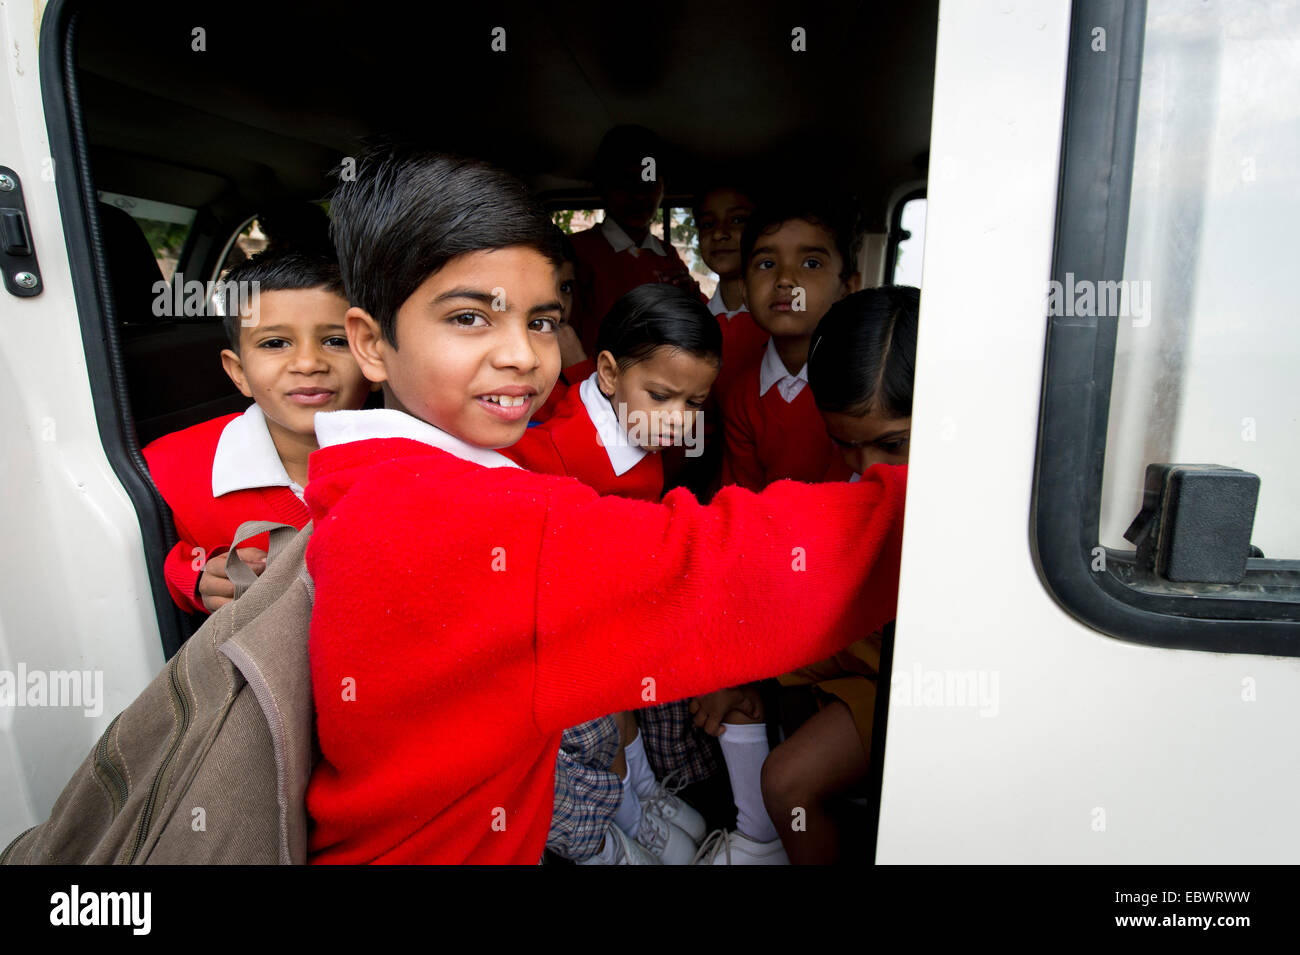 Students in school uniforms, Chittorgarh, Rajasthan, India Stock Photo